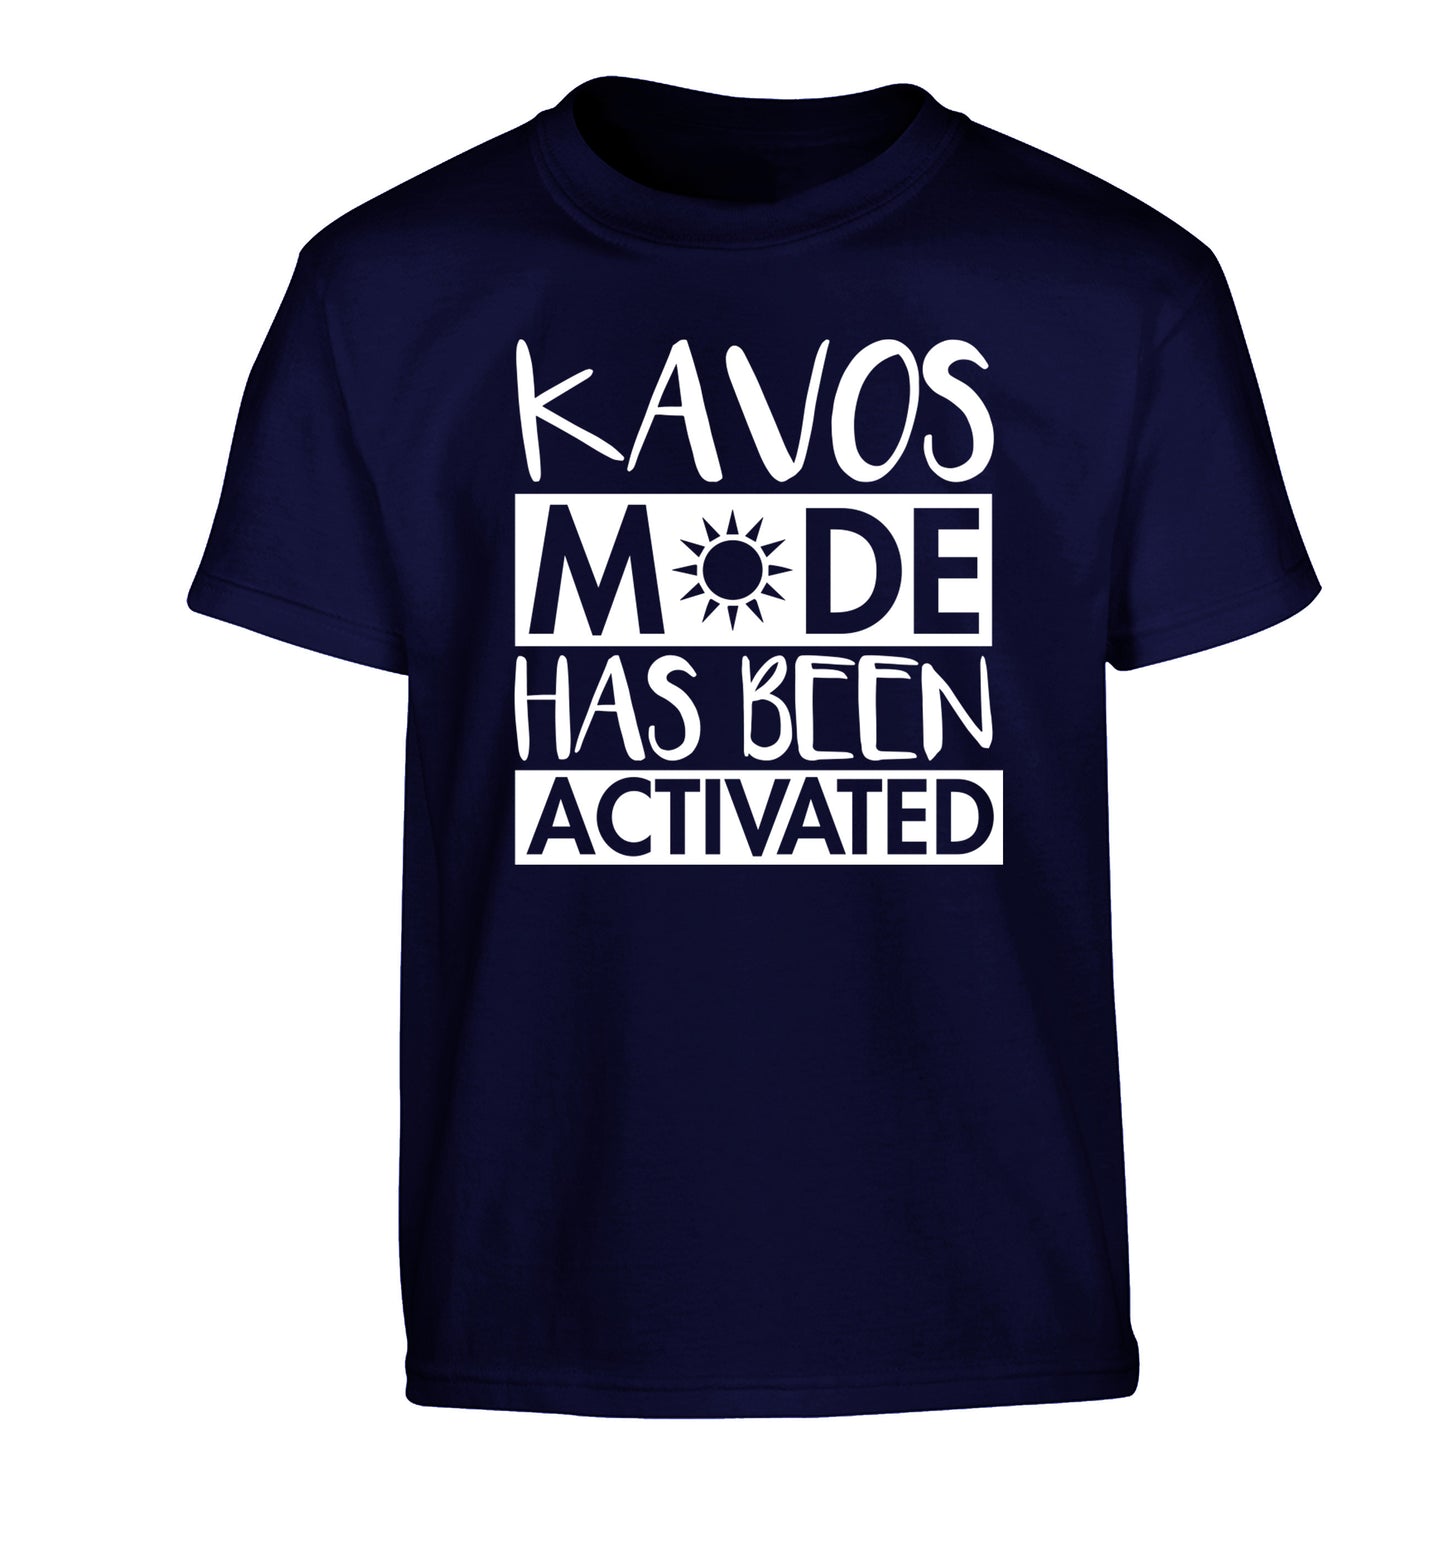 Kavos mode has been activated Children's navy Tshirt 12-14 Years